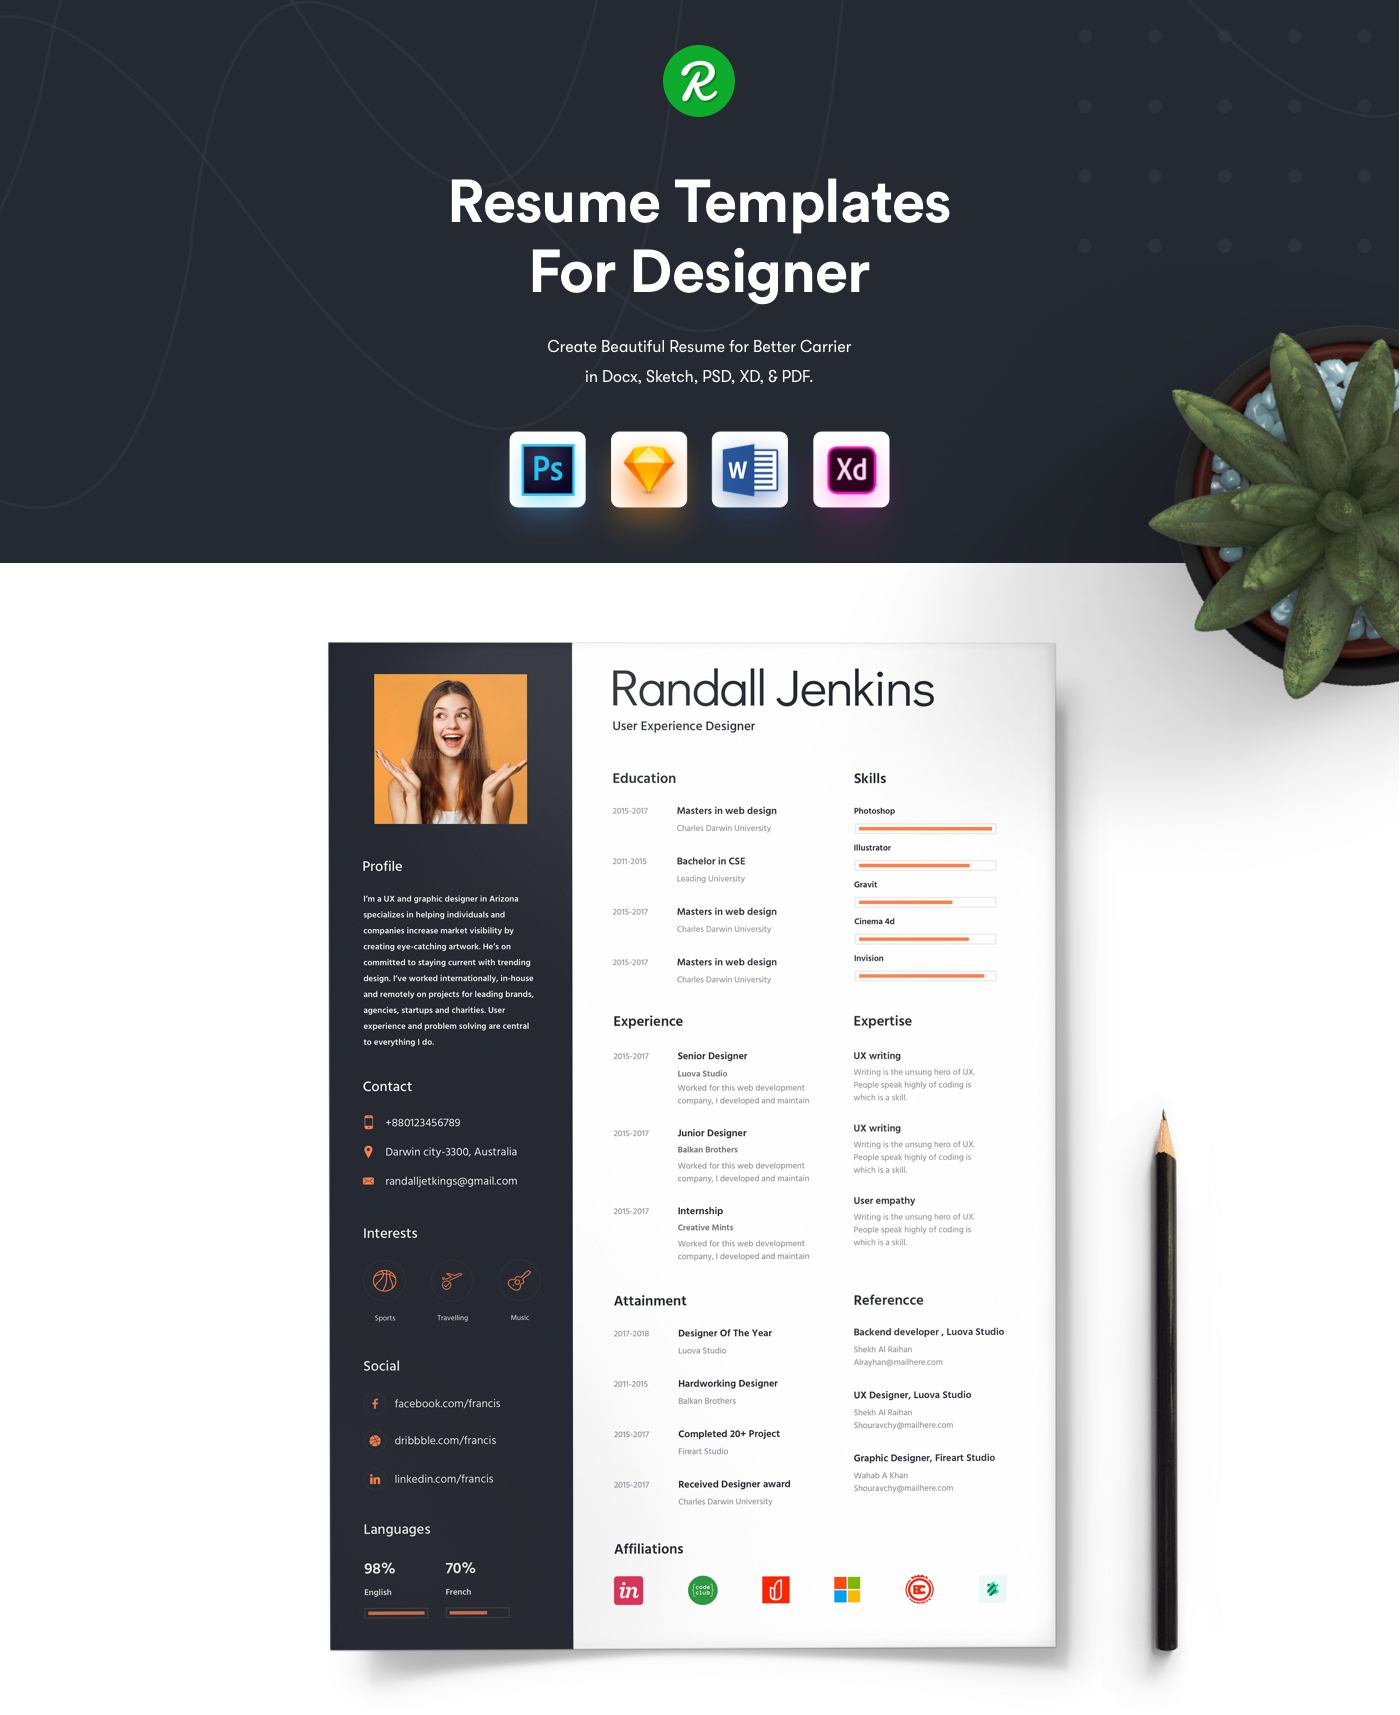 3. Free Resume Template For Designer